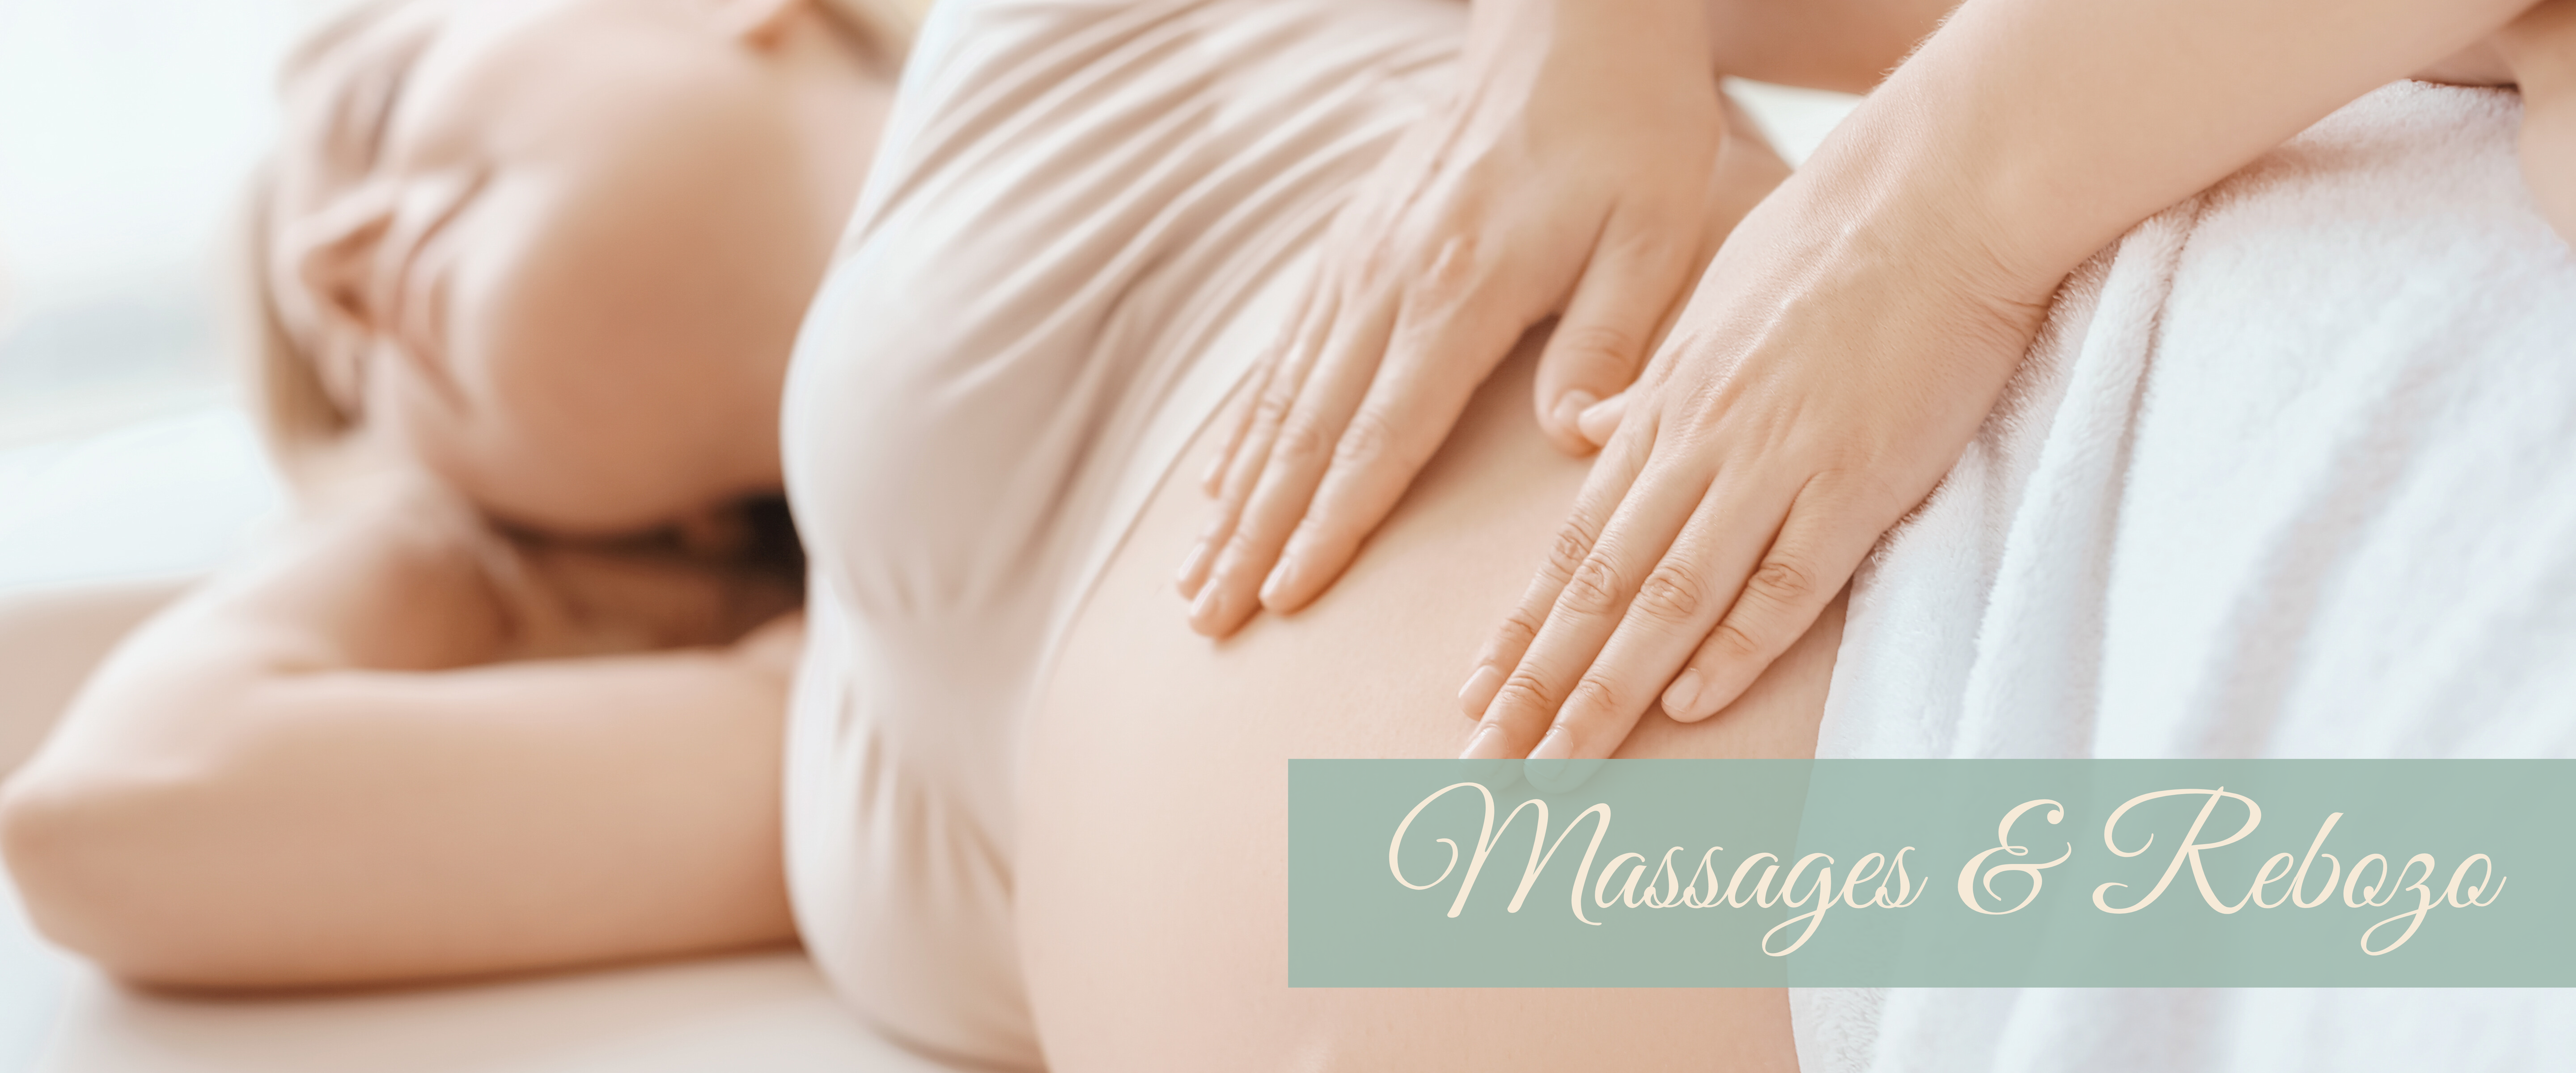 Massage femme enceinte et rebozo